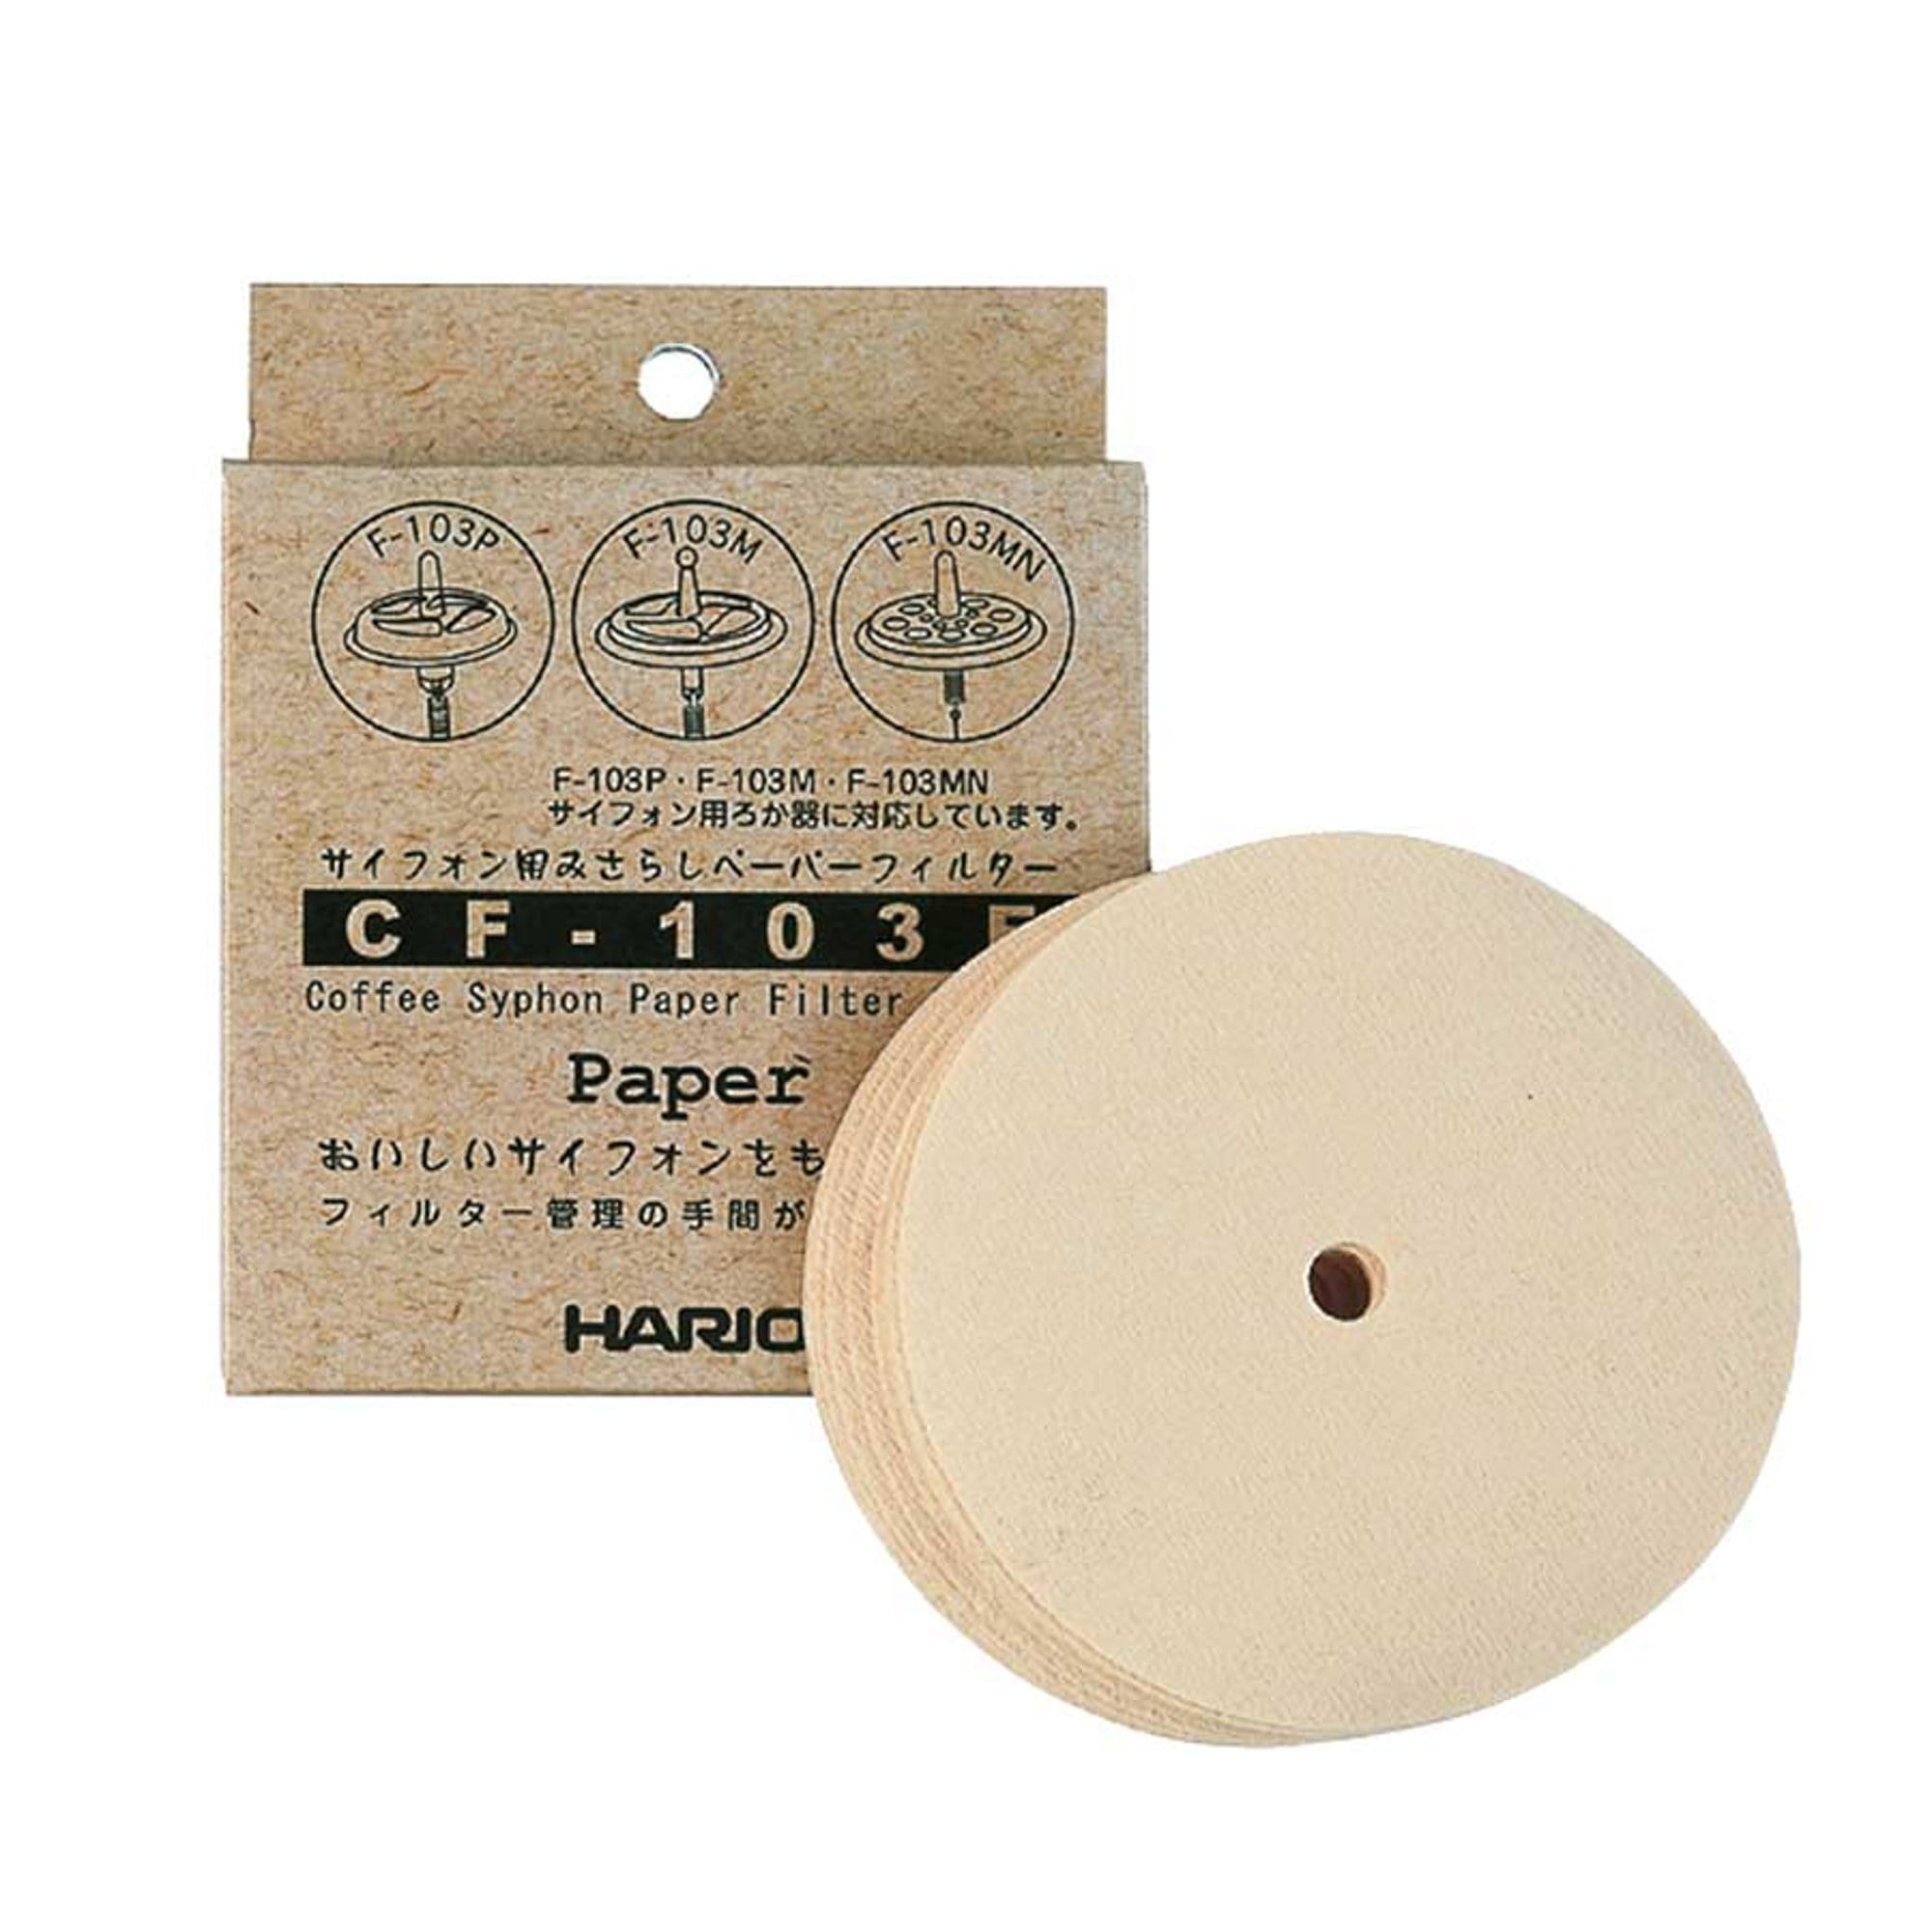 Hario Kafijas pagatavošanas rīki Sifona papīra filtri 100gab, Hario, CF-103E